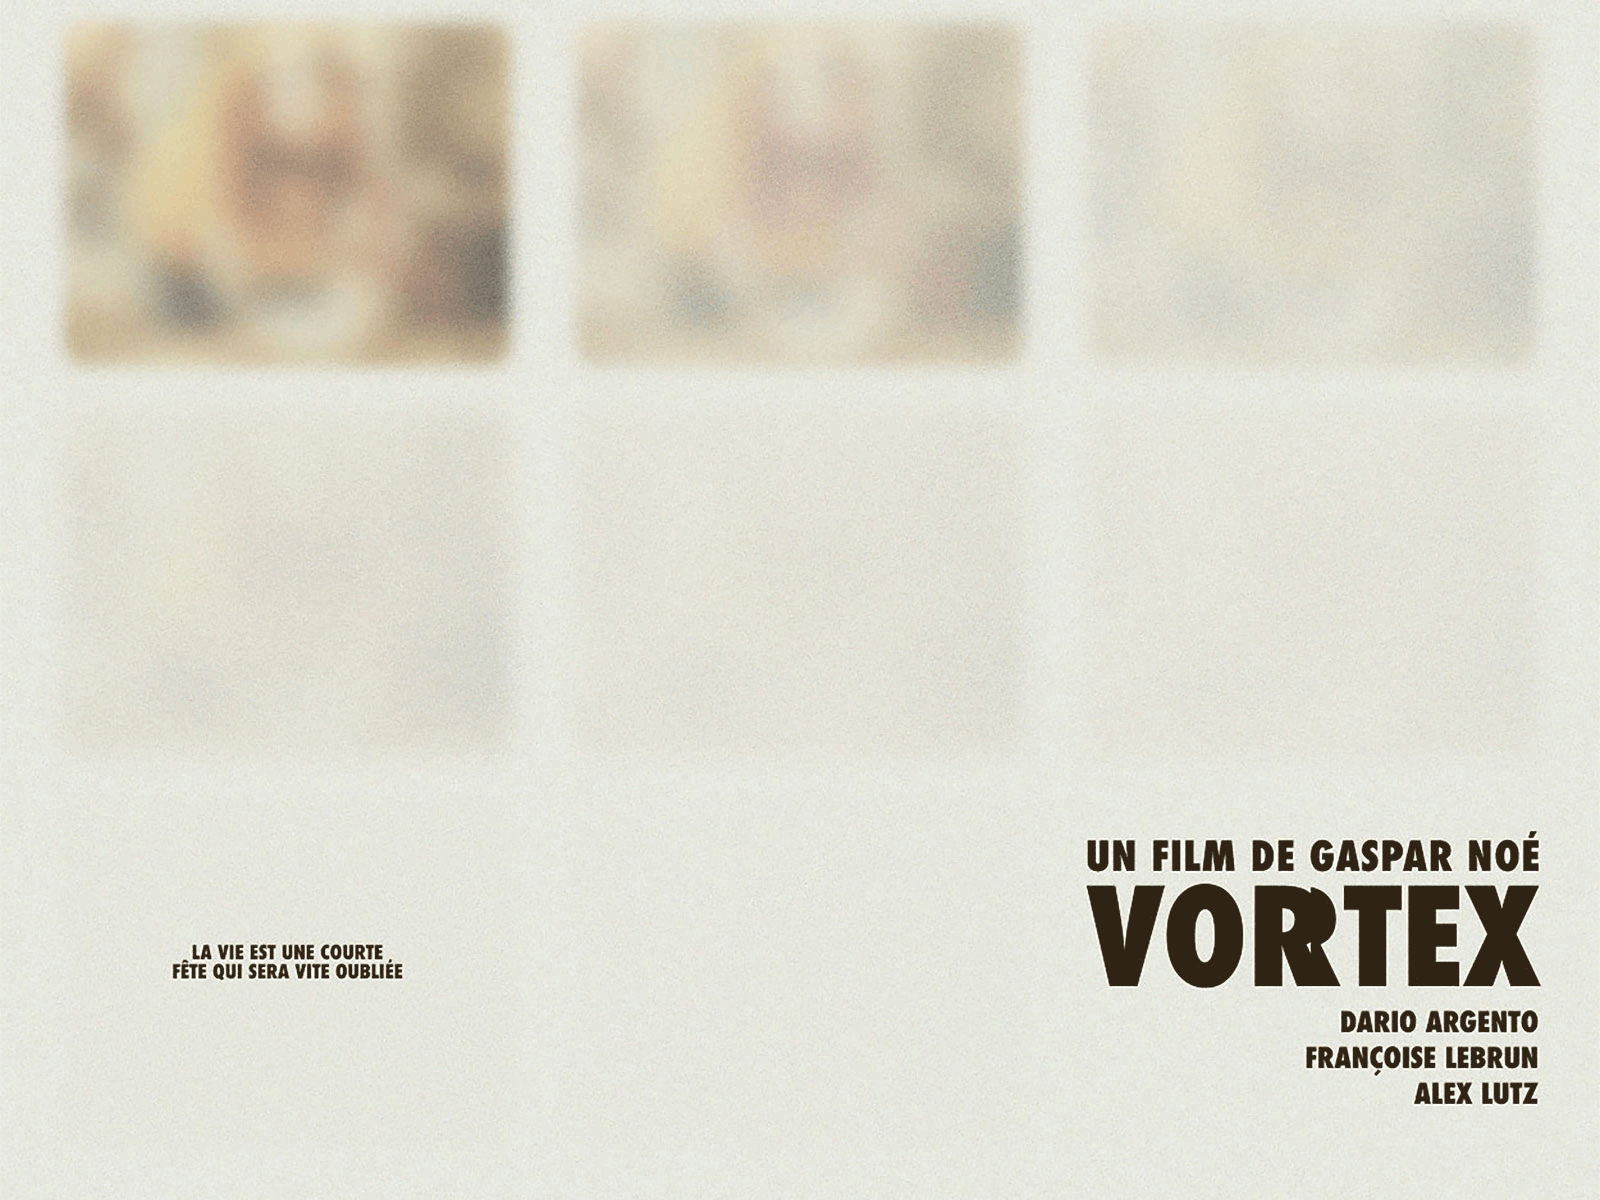 Gaspar Noé’s ‘Vortex’ animation gaspar noe movie movie poster movie posters movies poster poster design poster designer type vortex